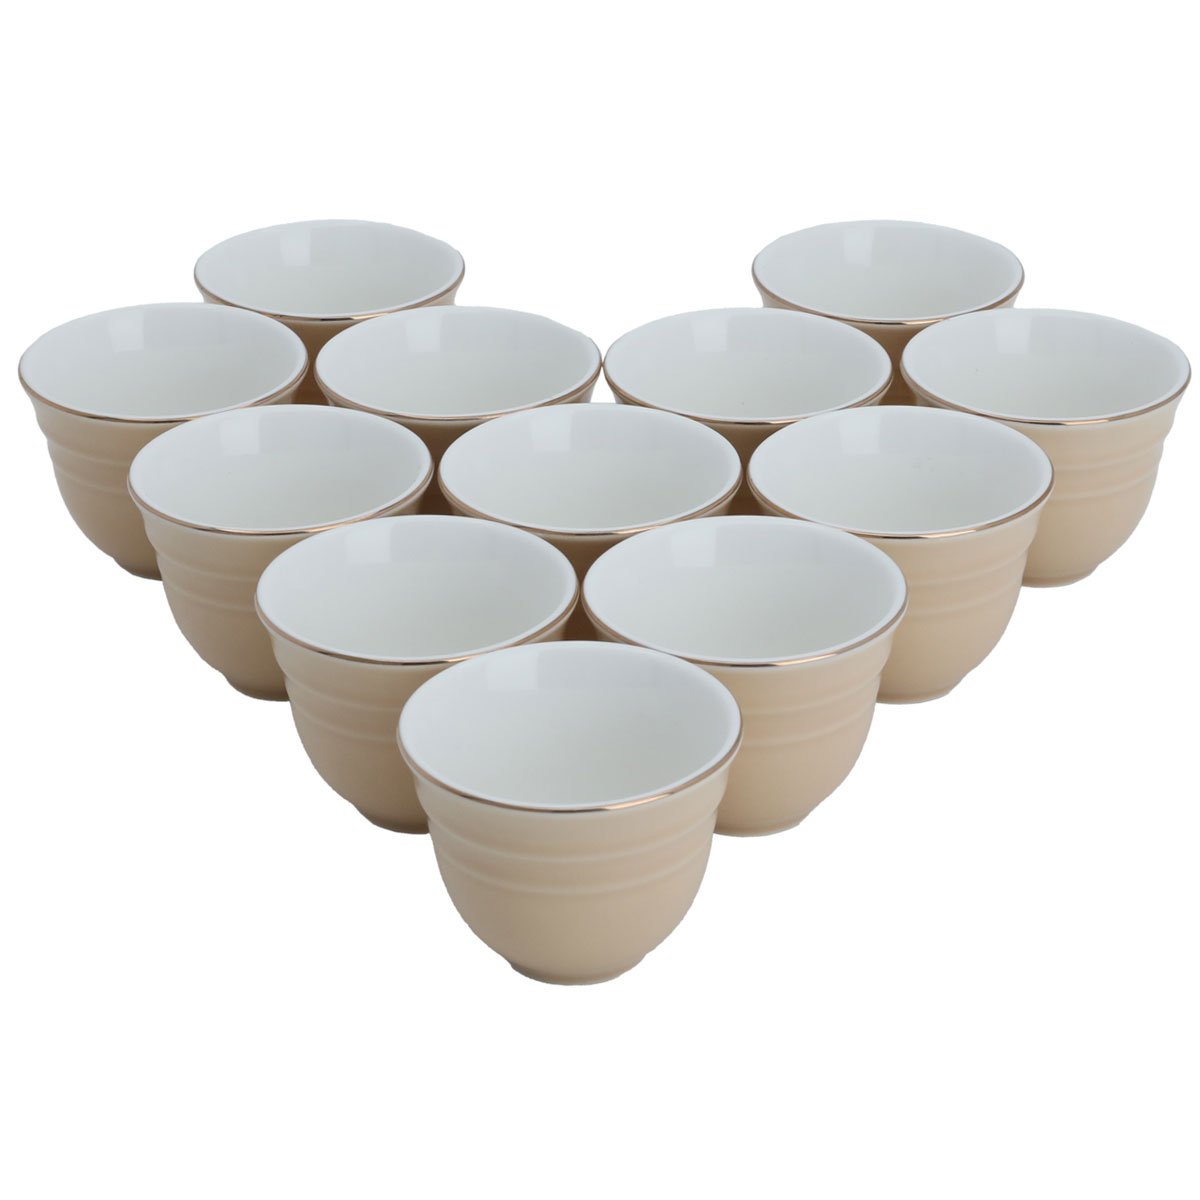 Standard Ceramic Cup at best price in Kochi by TCL Ceramics